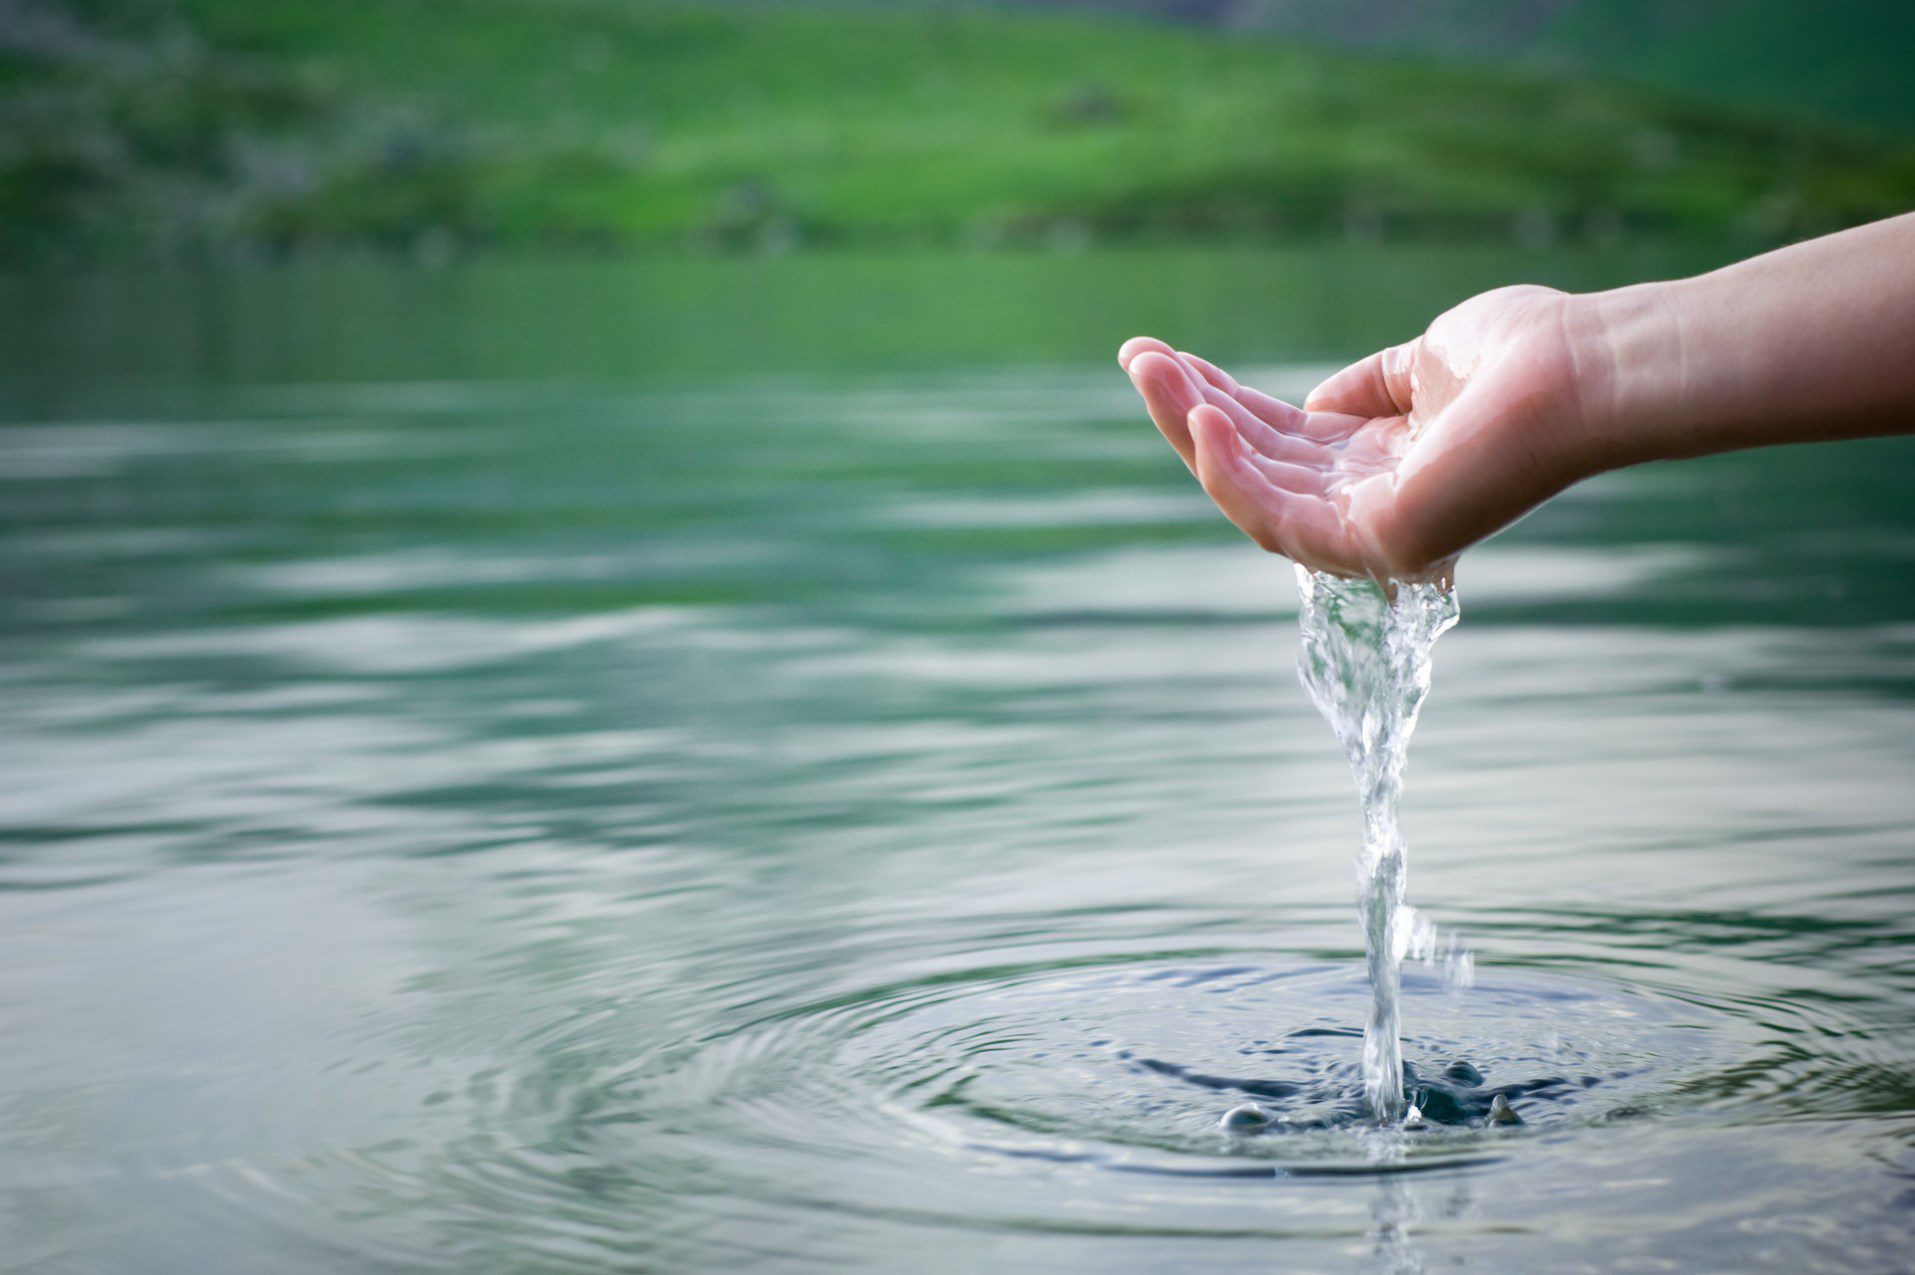 HomePure water filter ensures safe drinking water